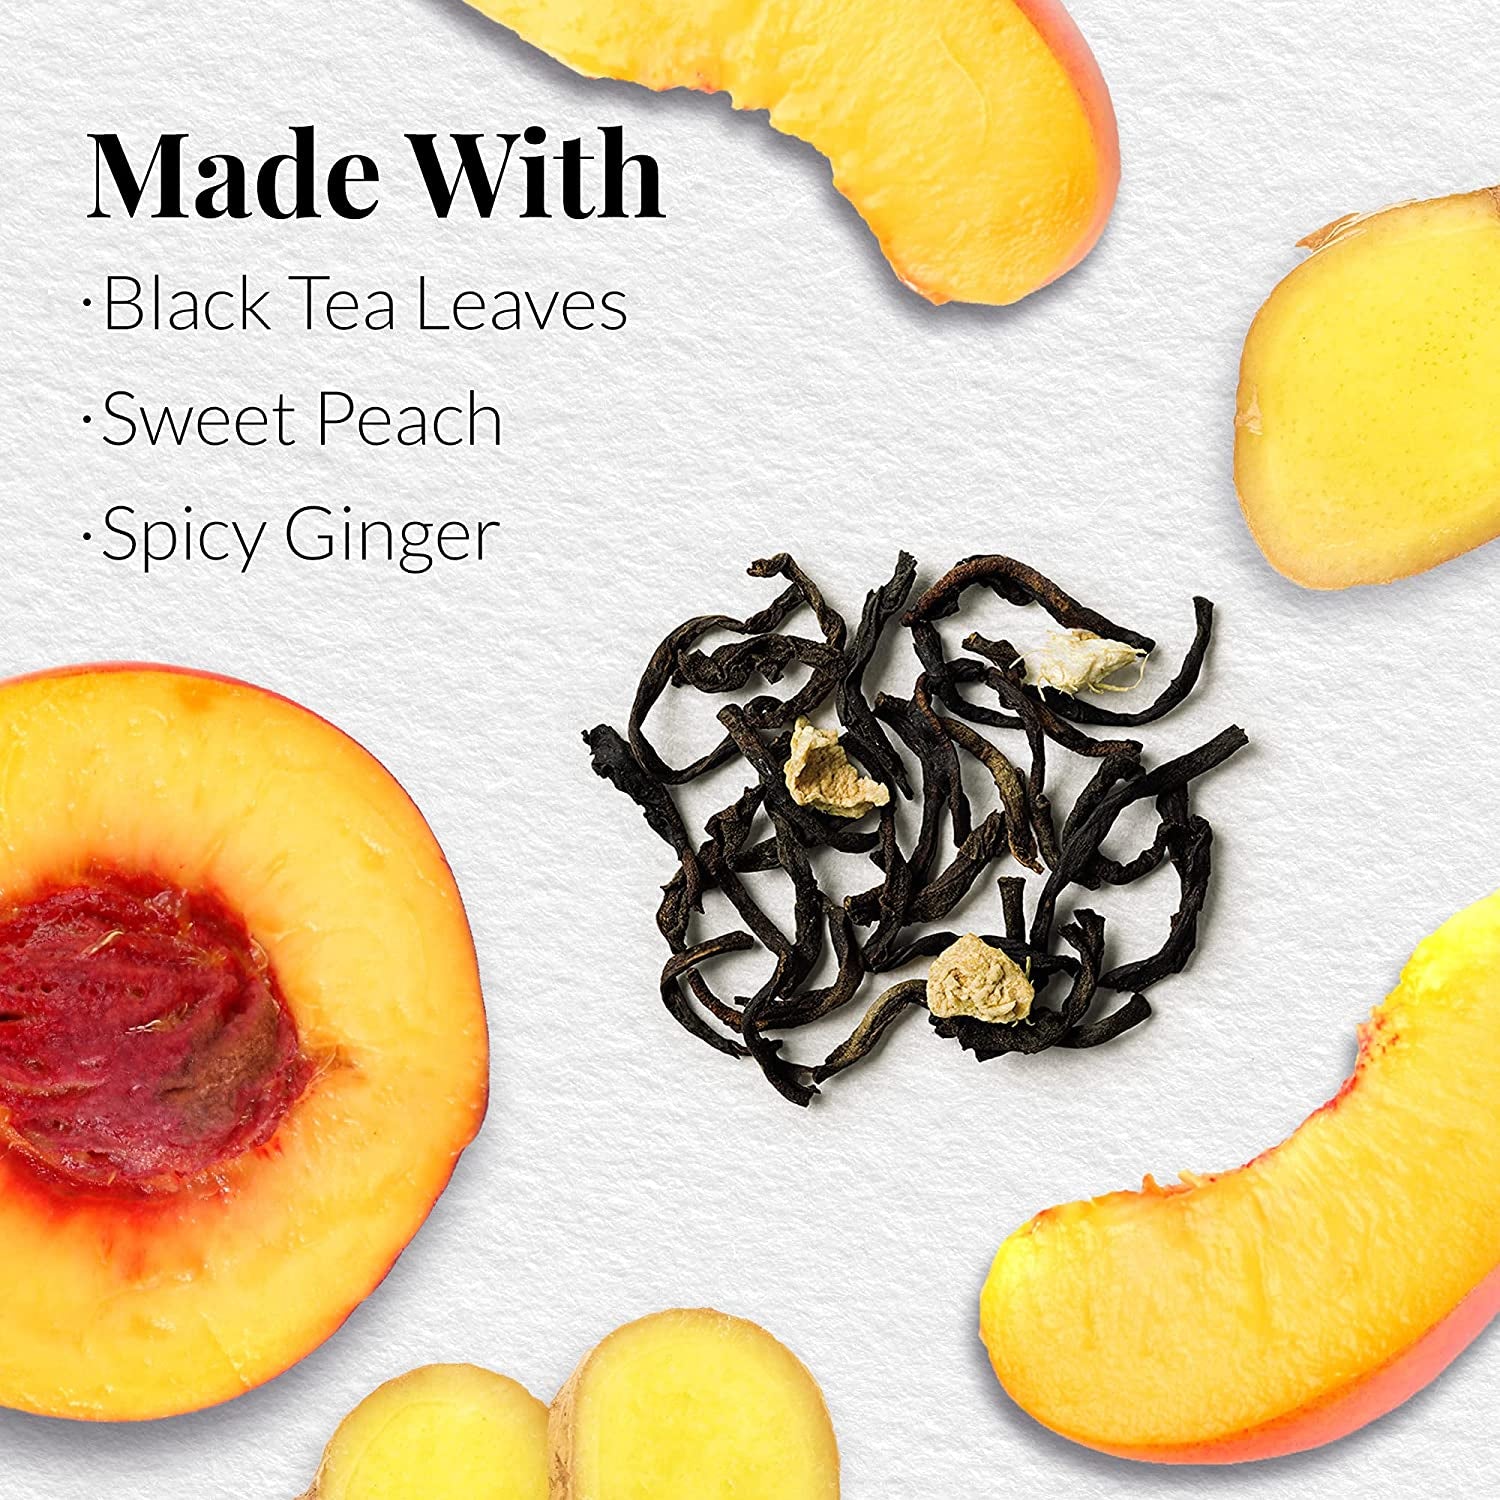 Ginger Peach Black Full-Leaf Loose Tea 3.5 Oz Bag, Steeps 50 Cups | Caffeinated